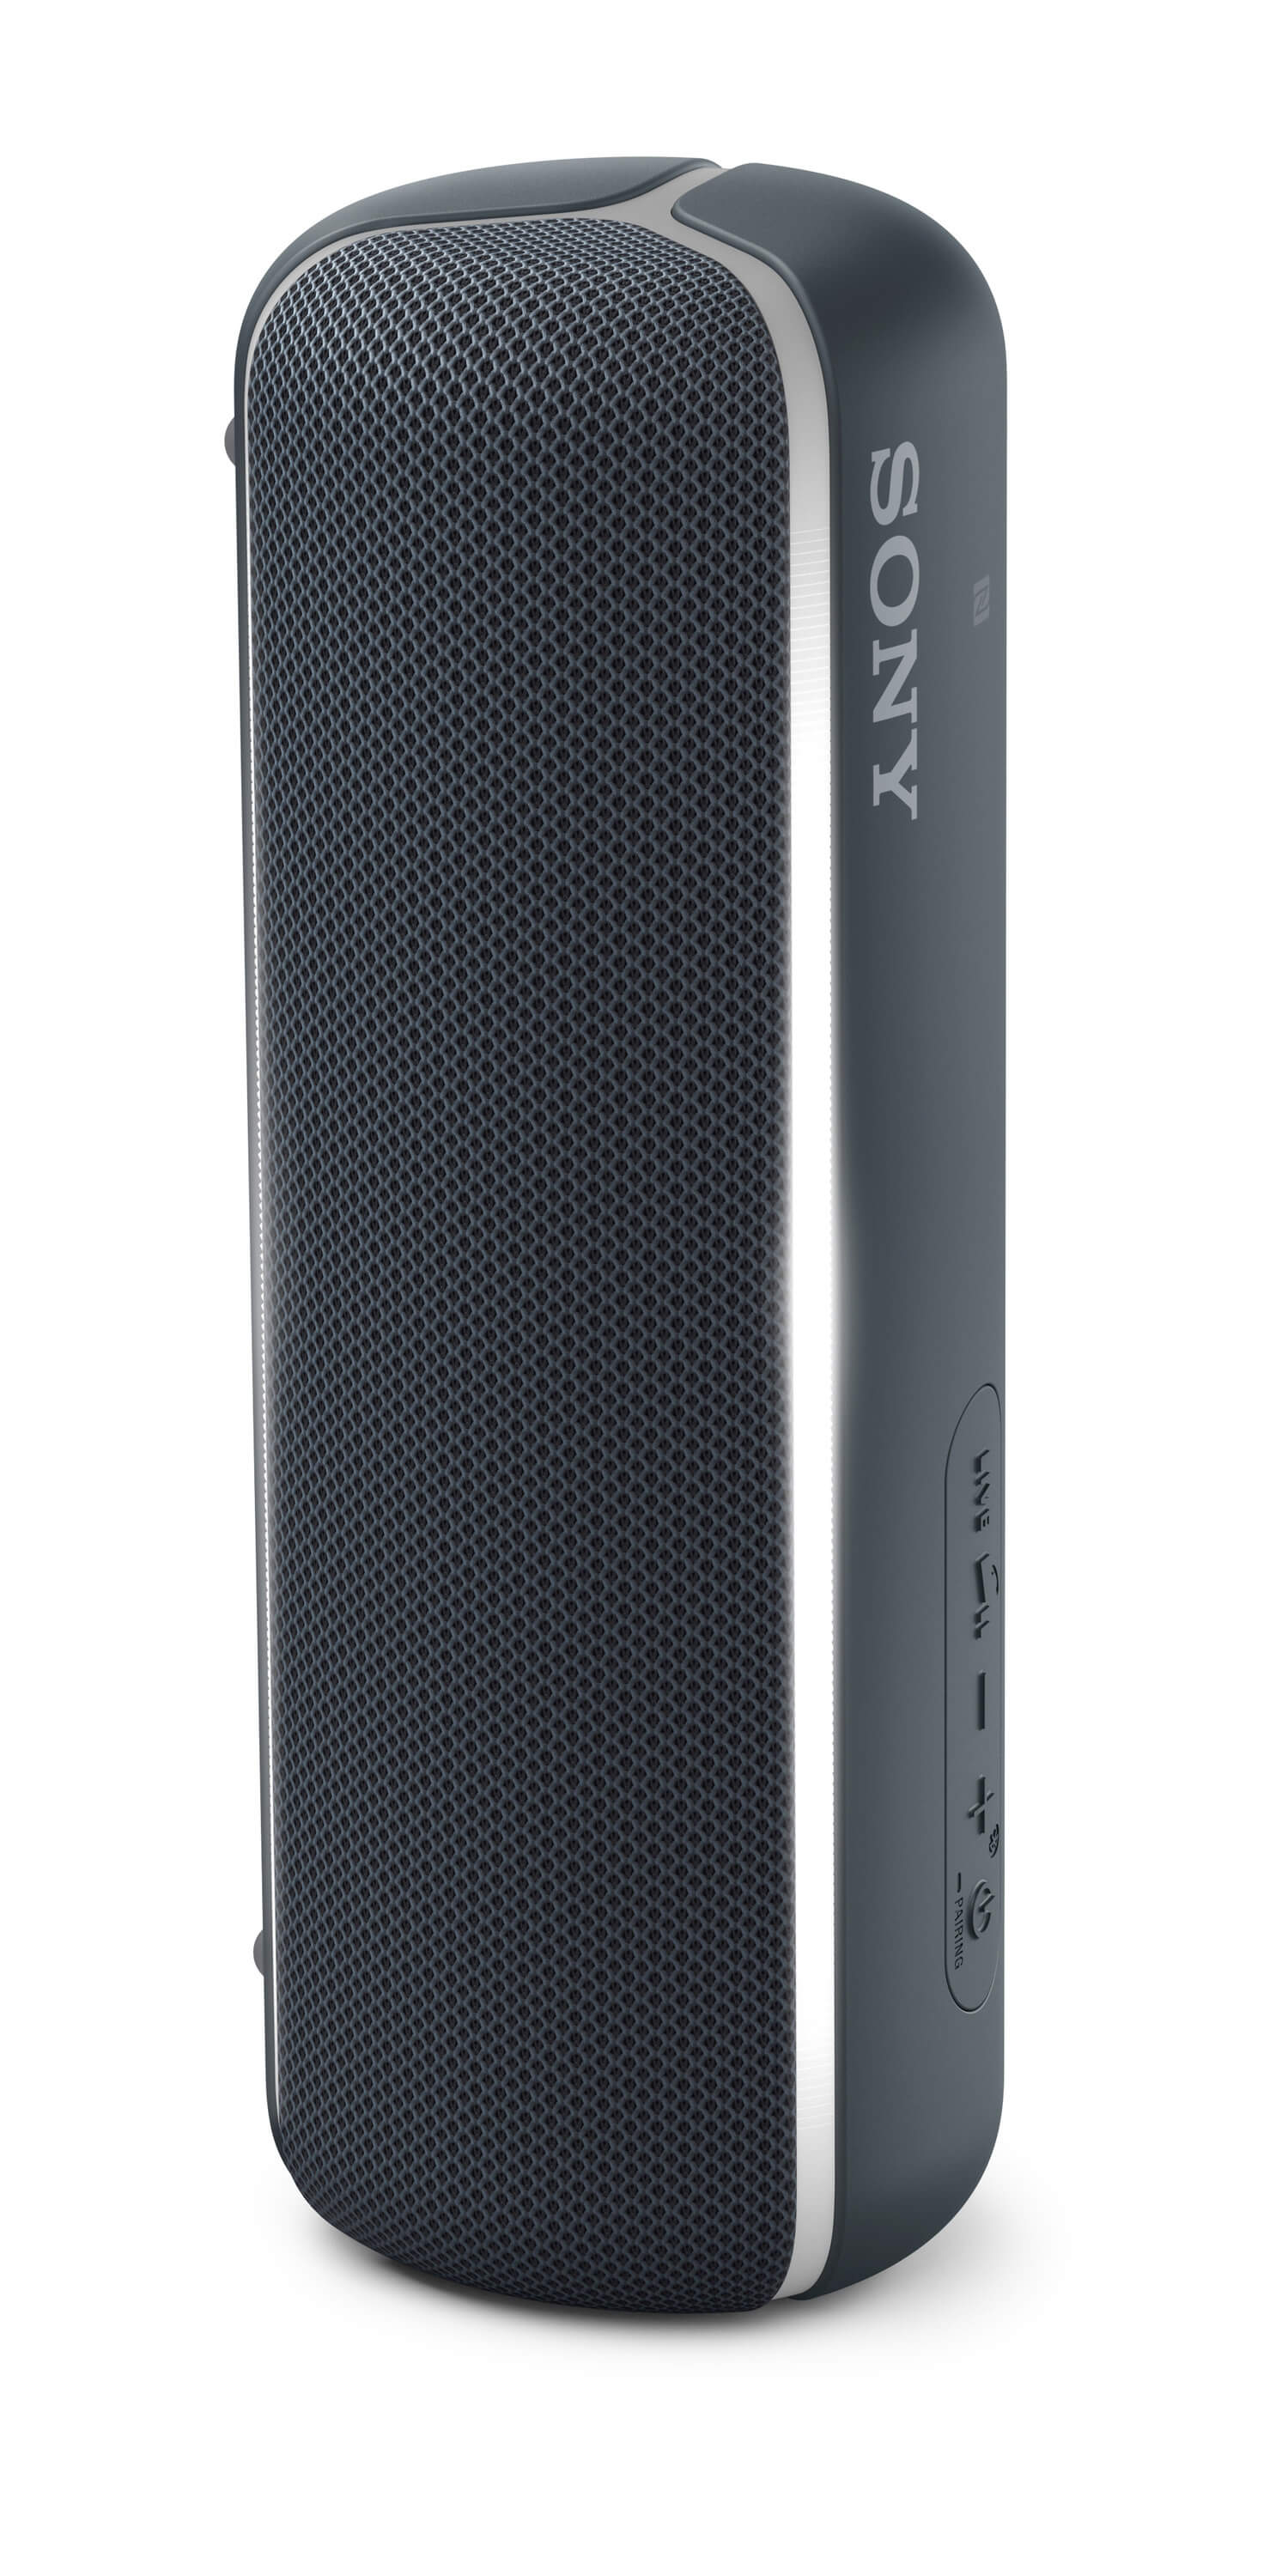 SRS-XB22 - NFC 藍牙喇叭(藍) - Sony 台灣官方購物網站- Sony Store, Online (Taiwan)